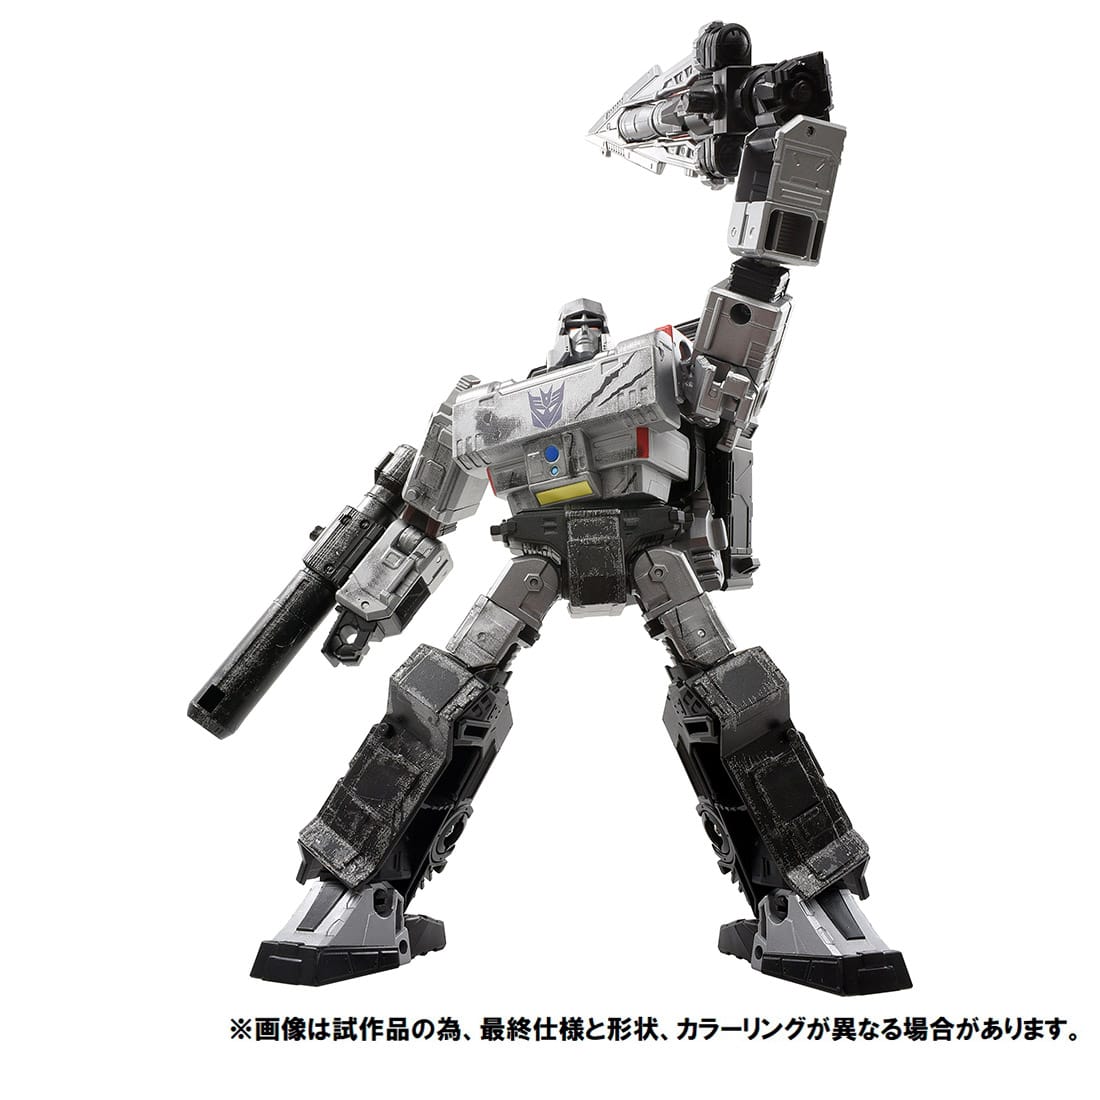 Takara Tomy Transformers Studio Serie SS-27 Megatron Figur Neu von Japan 